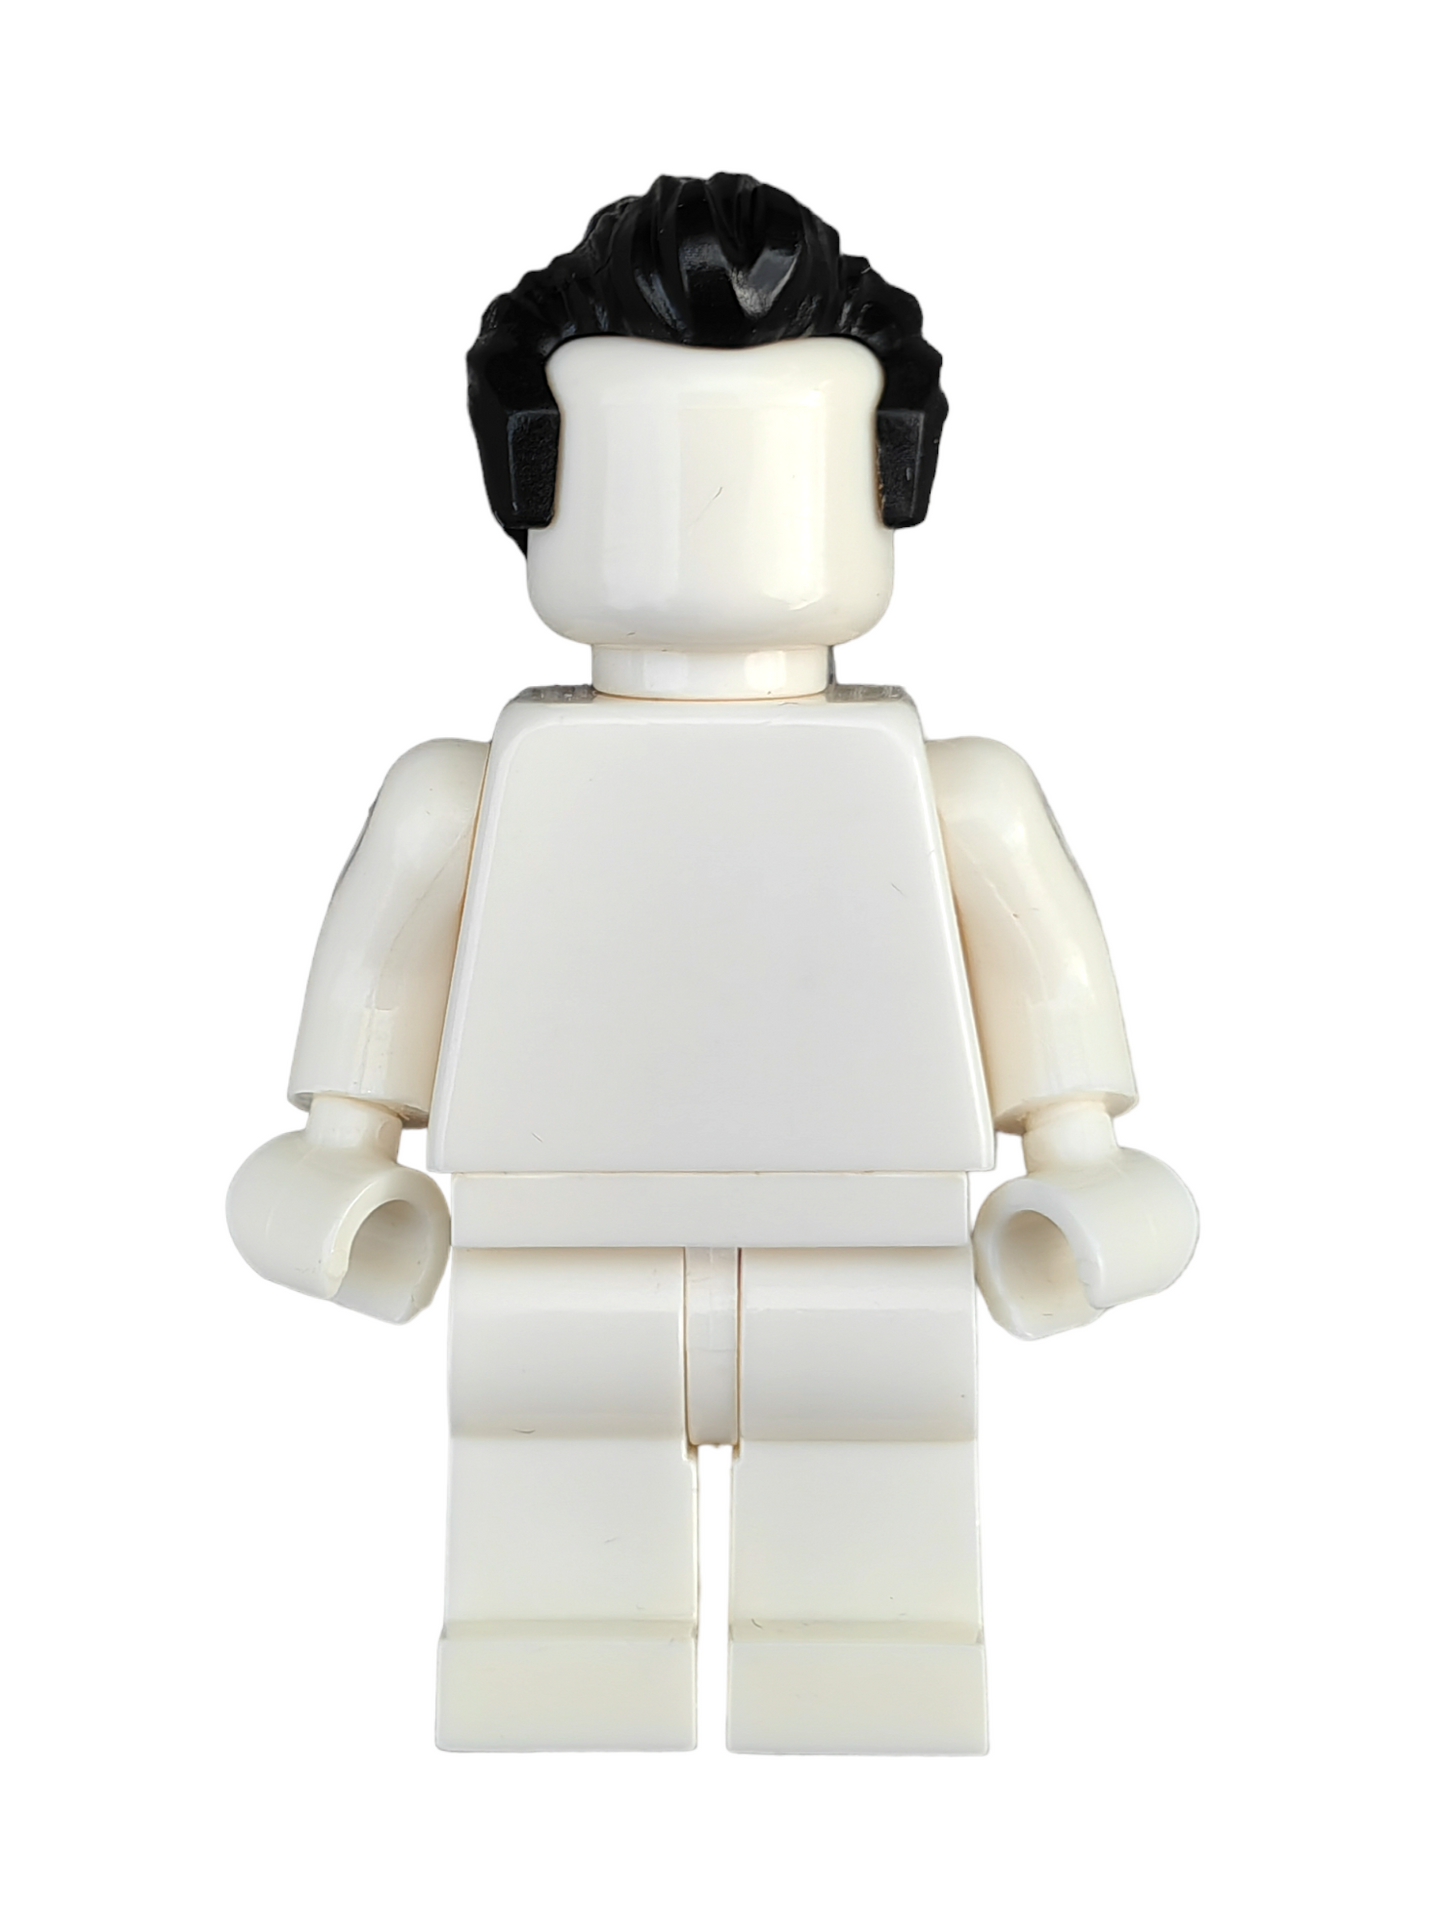 LEGO Wig, Black Hair Short Swept Back with Sideburns - UB1333